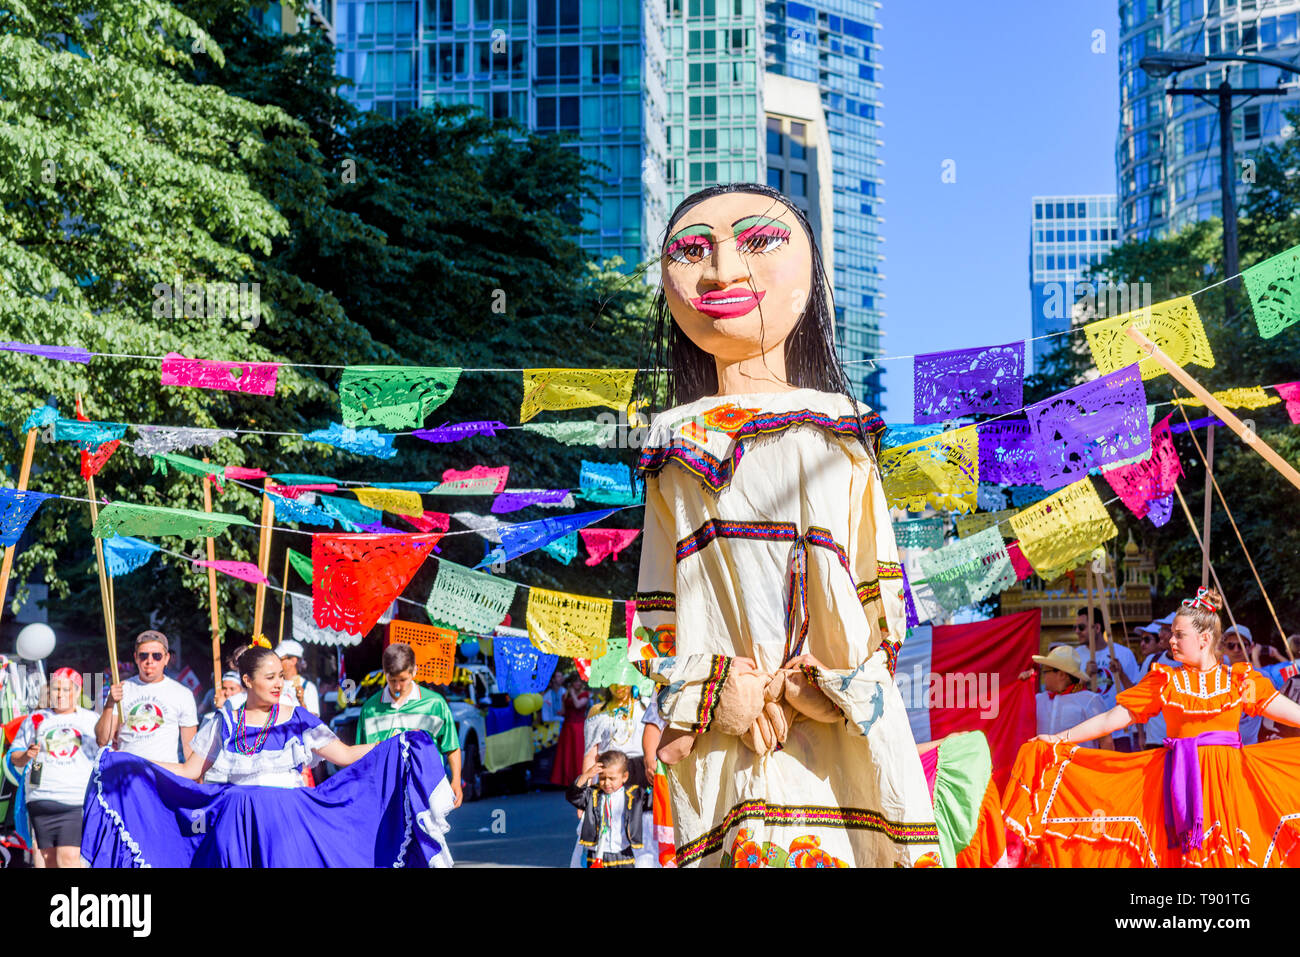 Mexikanisch-Gruppe feiert kanadischen zu Kanada 150, Canada Day Parade, Vancouver, Britisch-Kolumbien, Kanada. Stockfoto